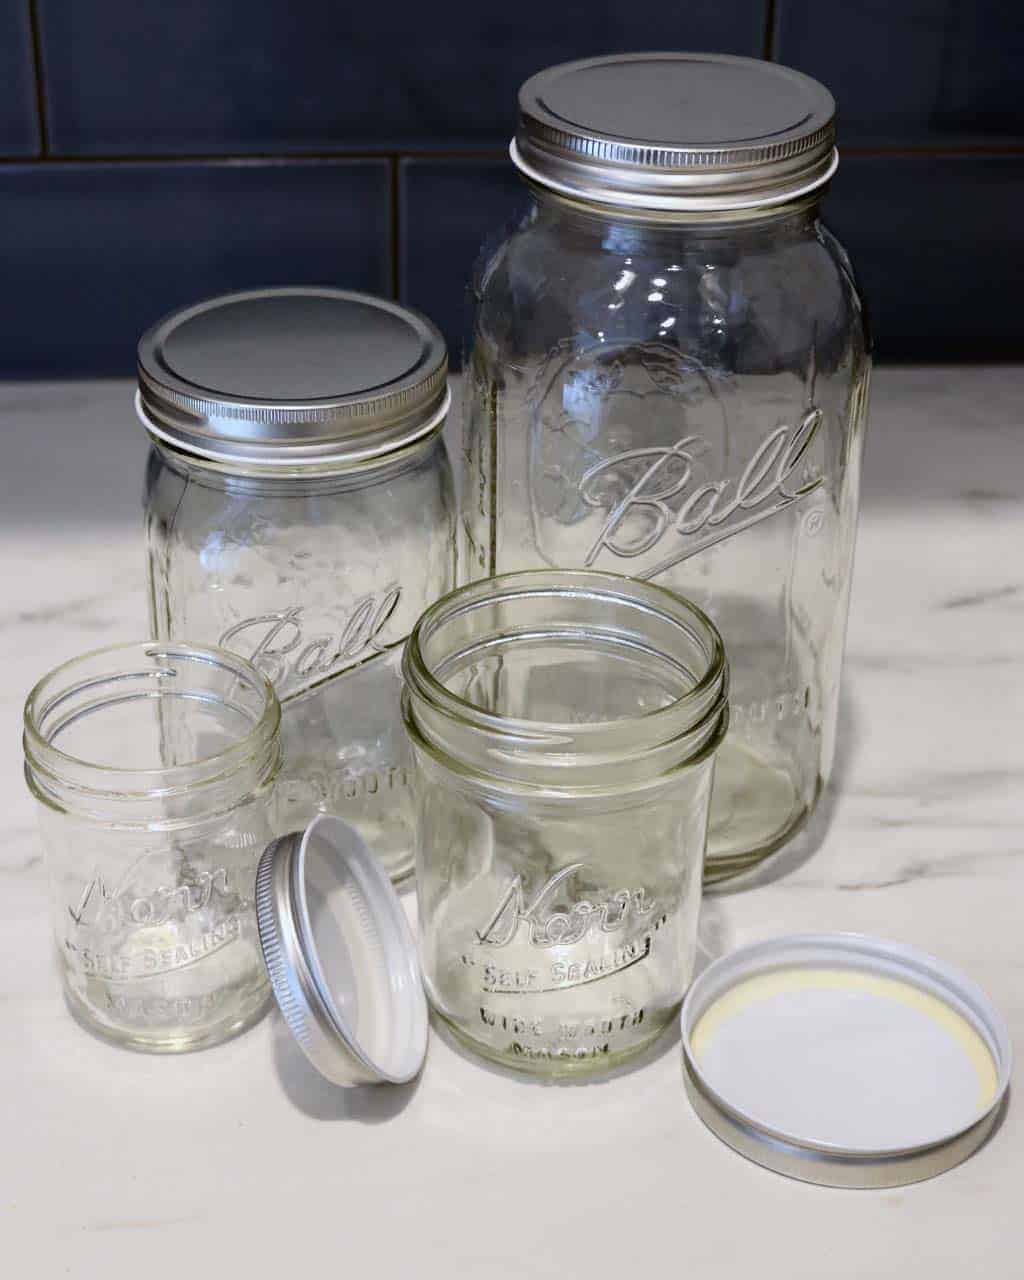 Six Pack Glass Jars